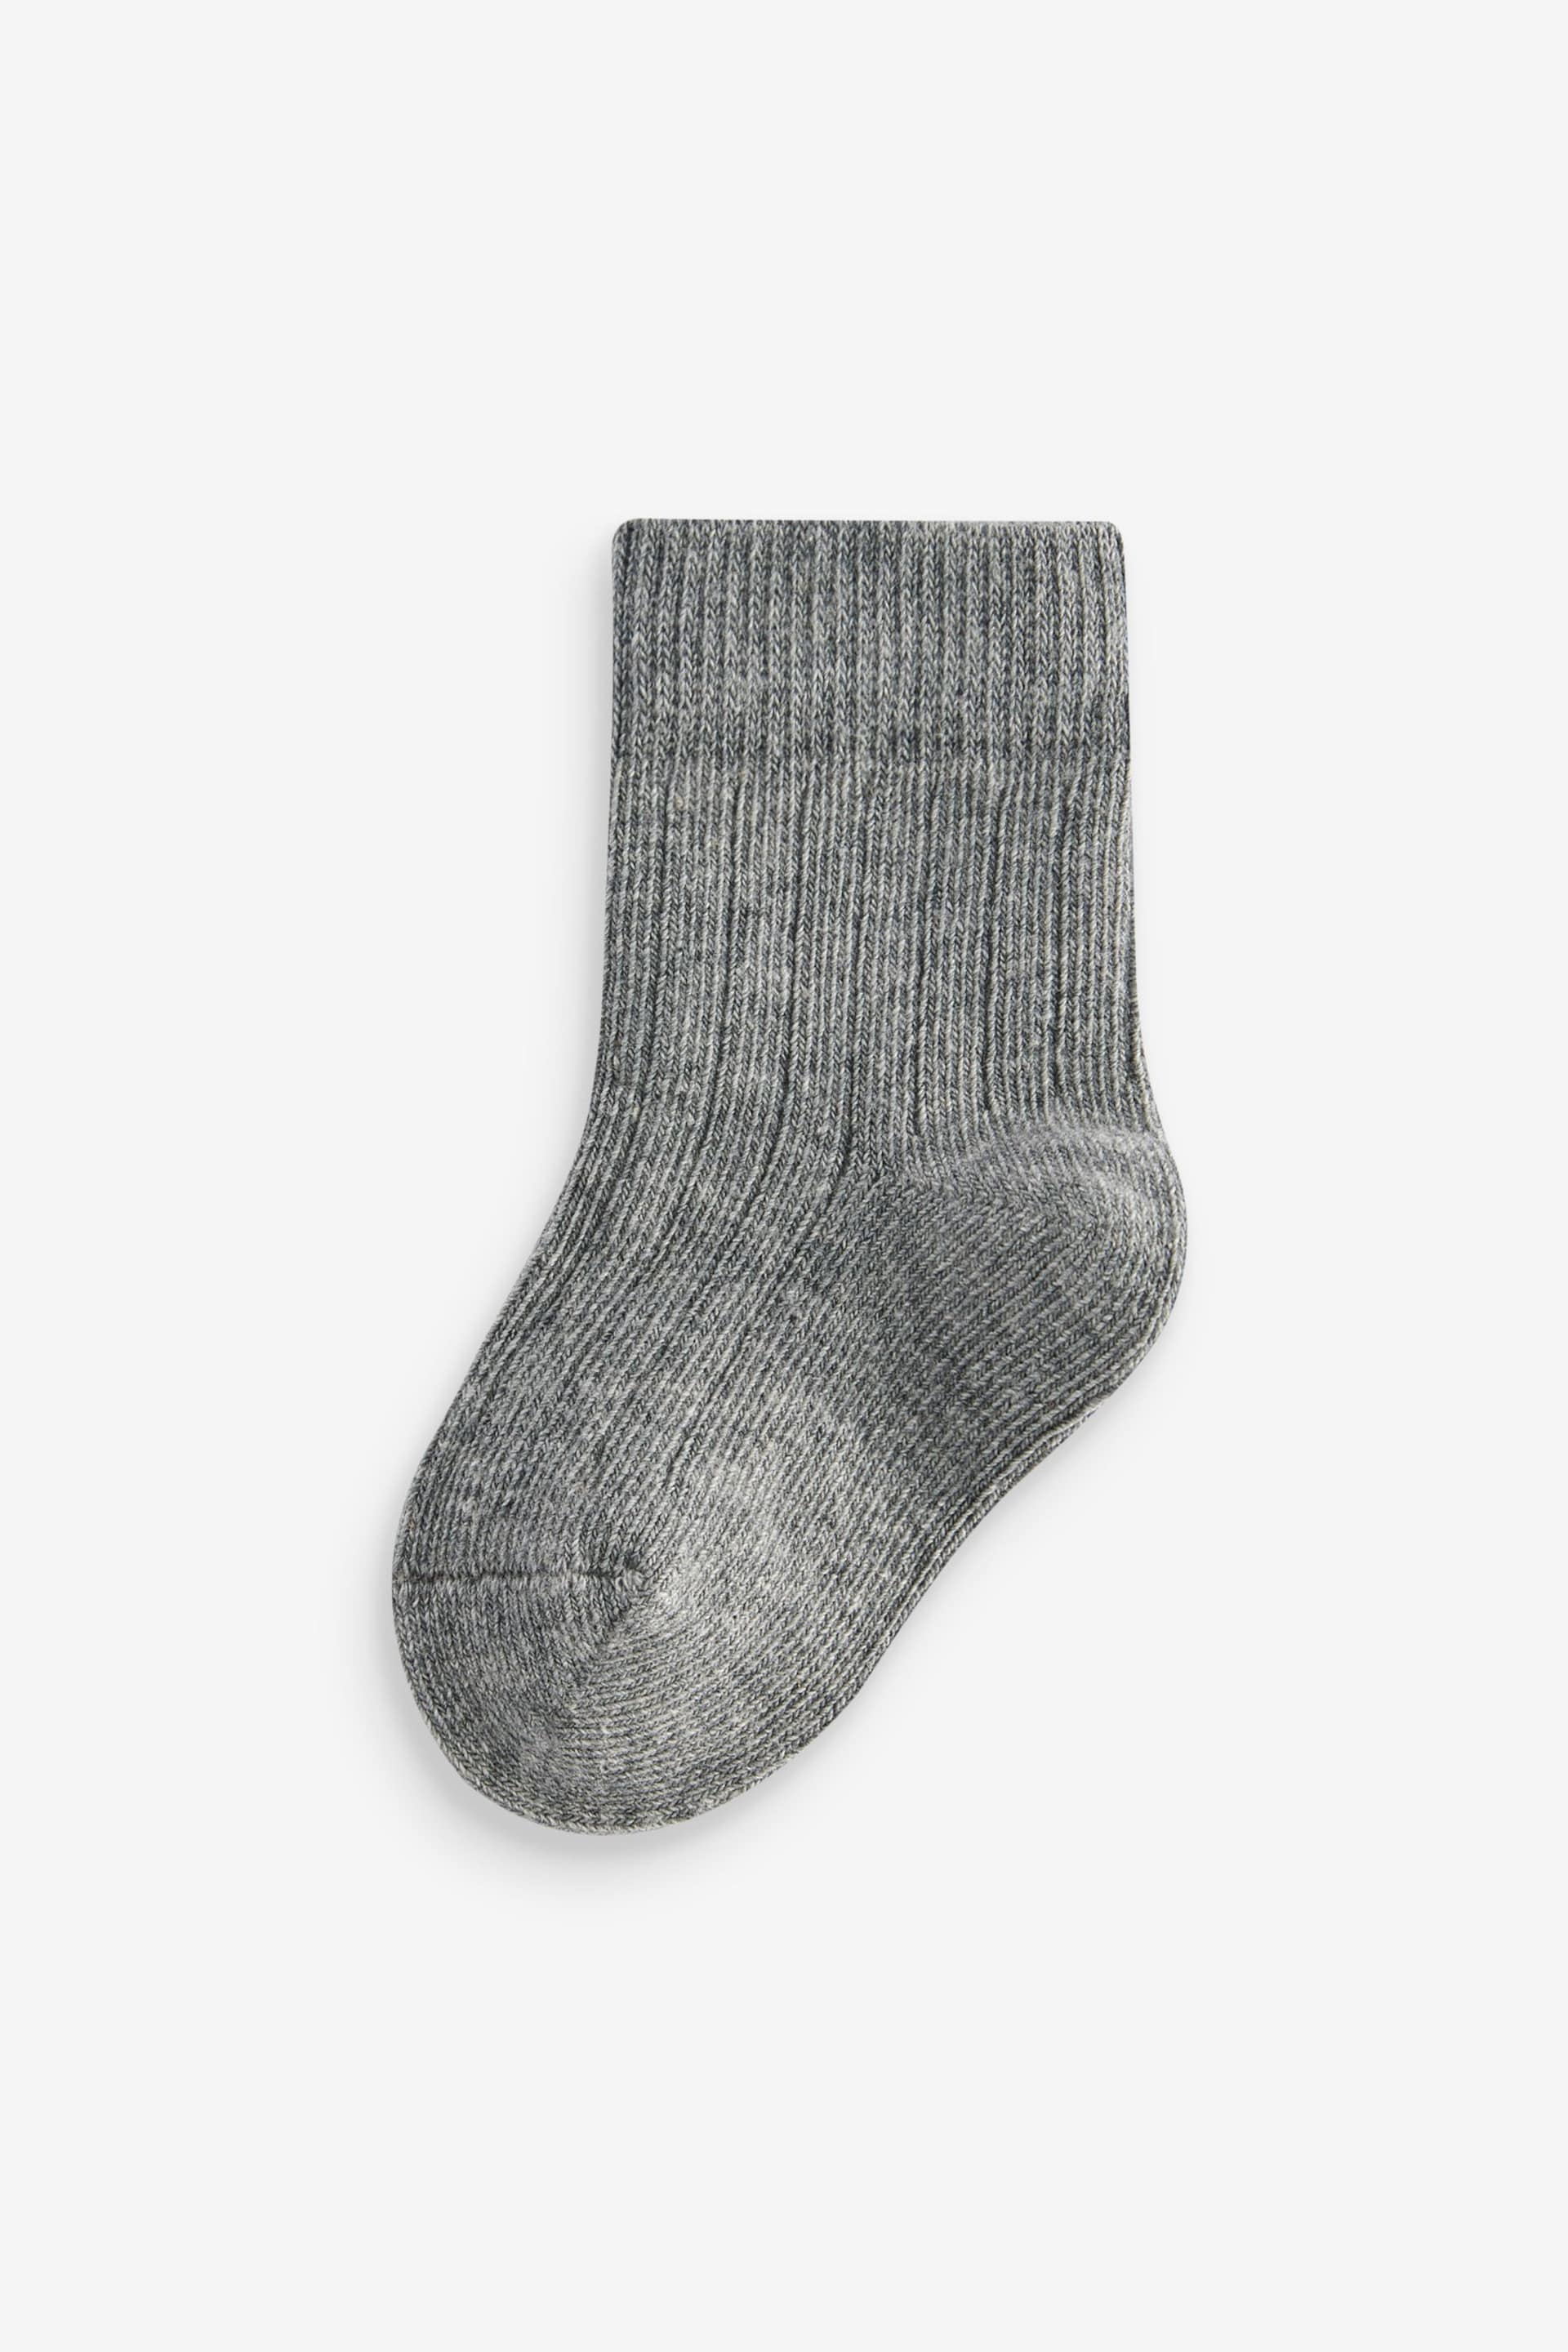 Grey Baby Socks 4 Pack (0mths-2yrs) - Image 3 of 5